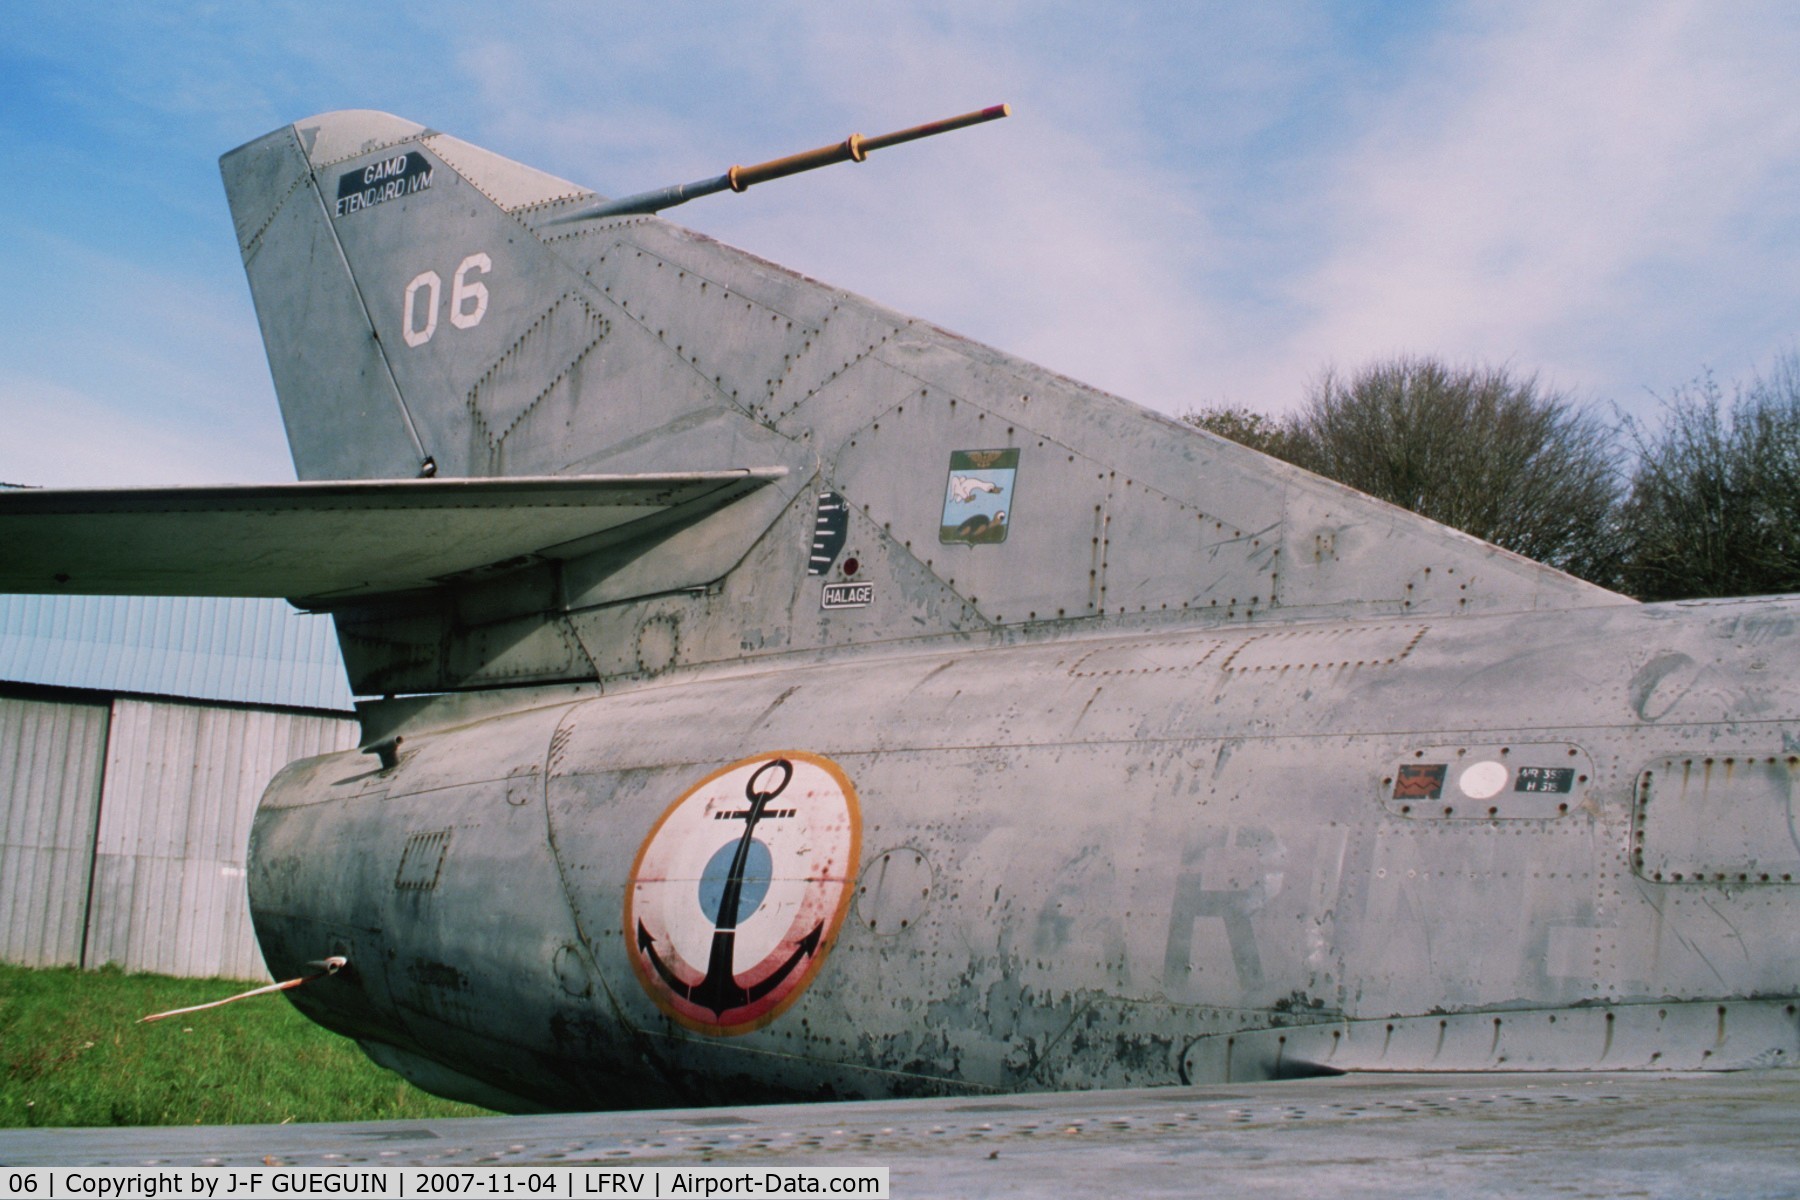 06, Dassault Etendard IV.M C/N 06, Tail of Etendard IV.M n° 06 with badge of escadrille 59S, French Navy.